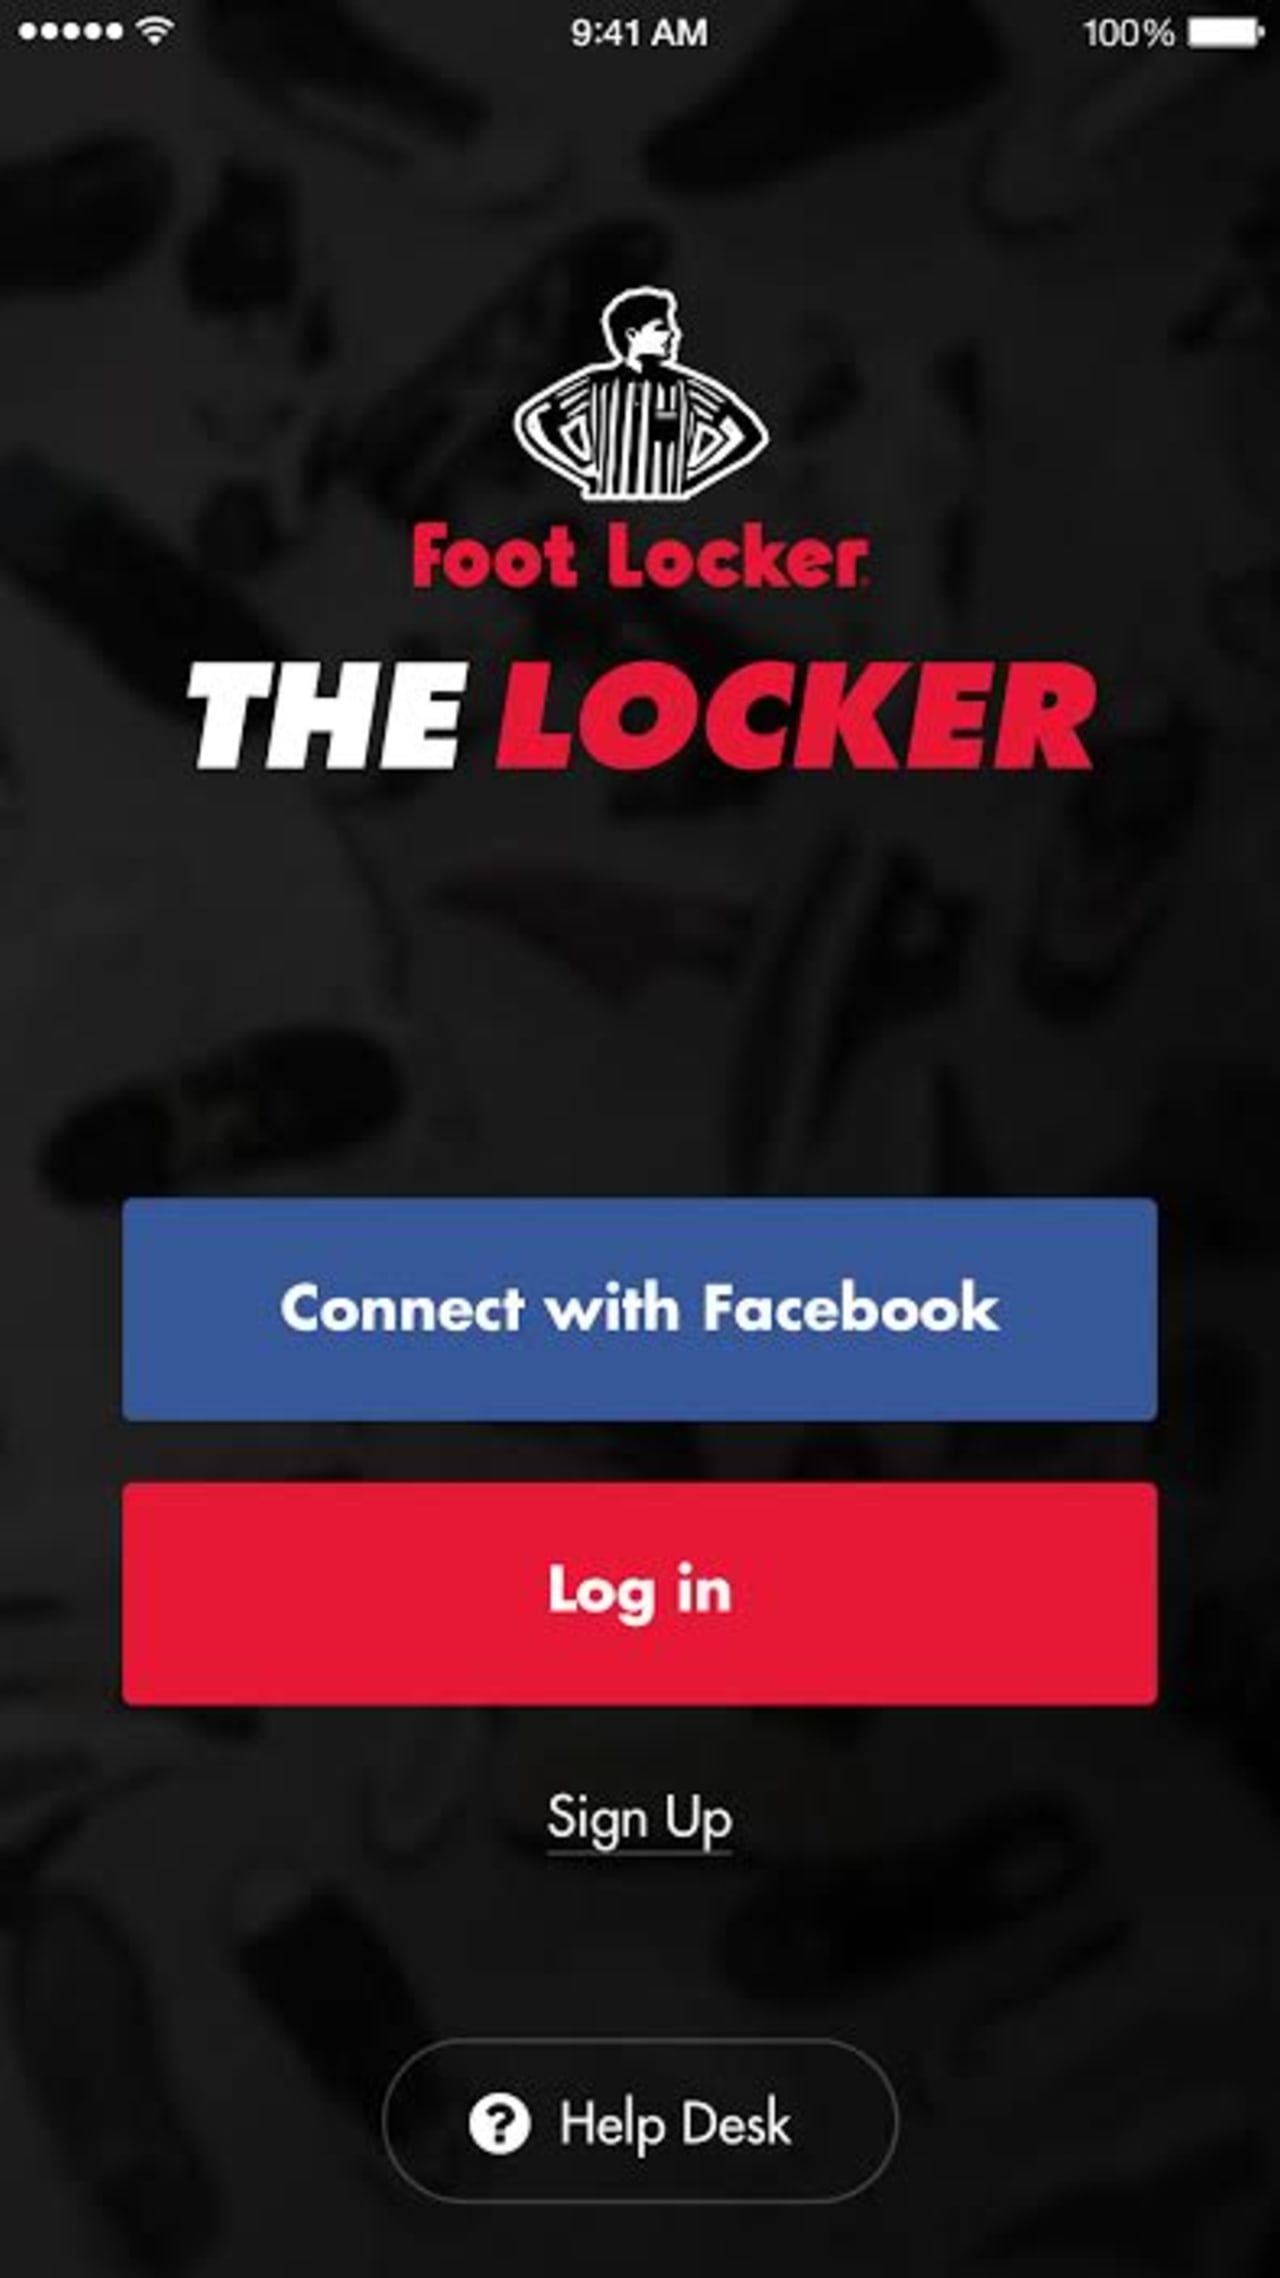 footlocker release calendar au